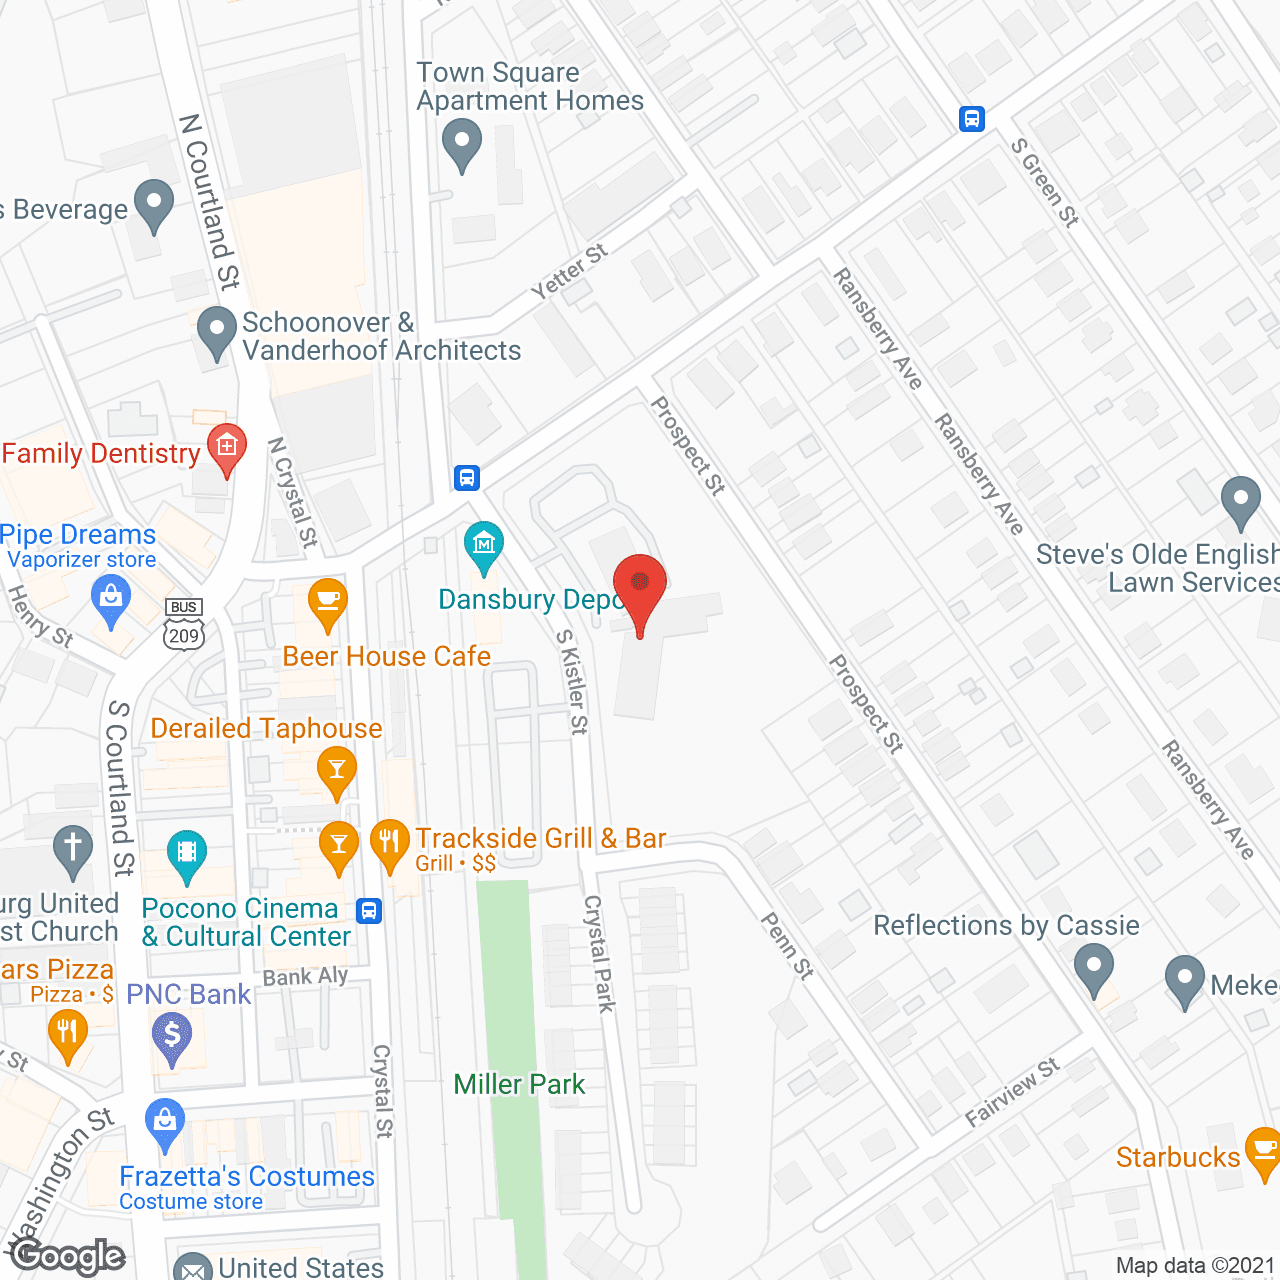 Shirley Futch Plaza in google map